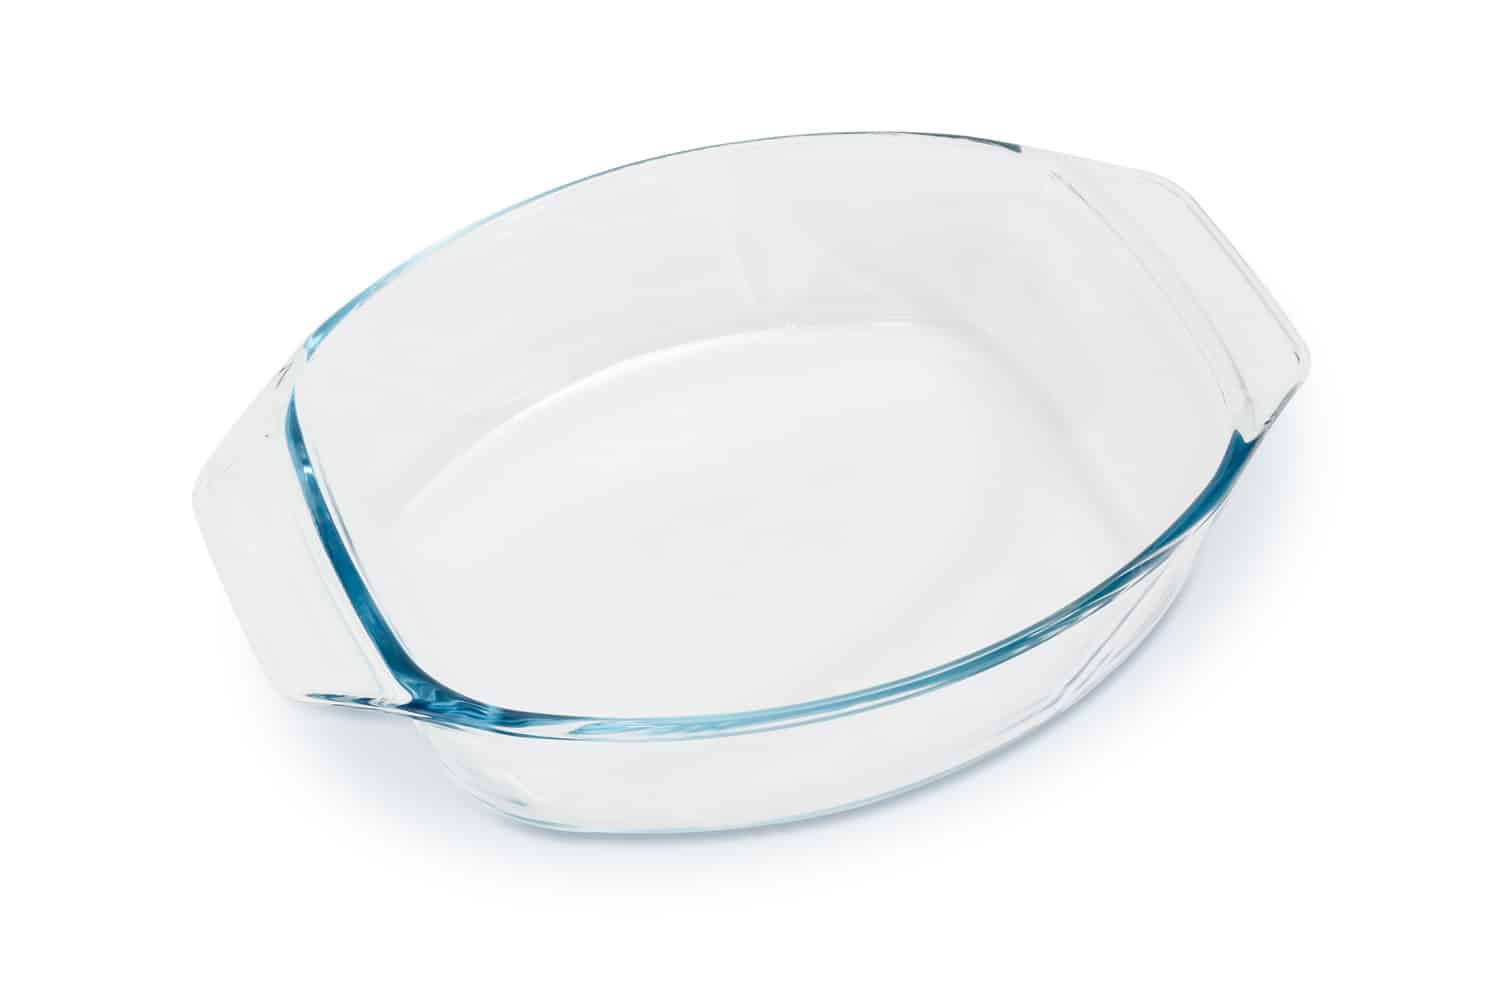 Empty oval glass casserole pan on a white background